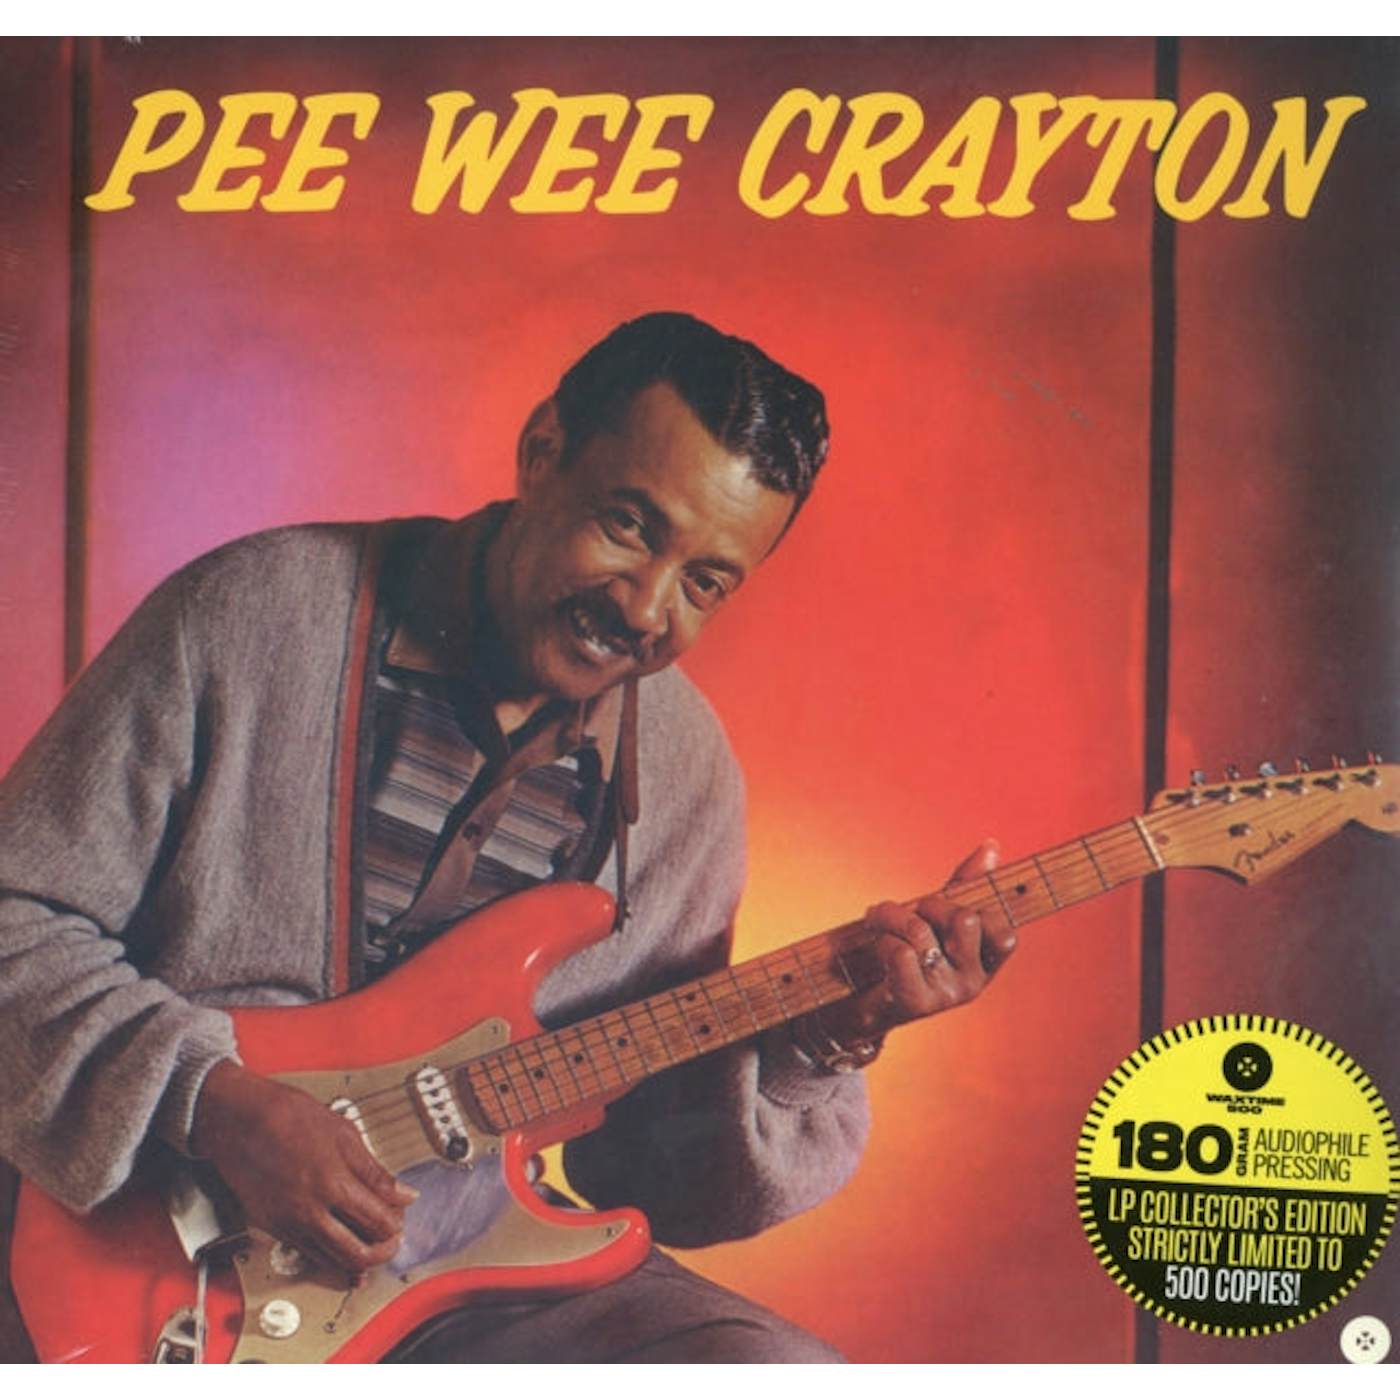 Pee Wee Crayton LP Vinyl Record - 19 60 Debut Album